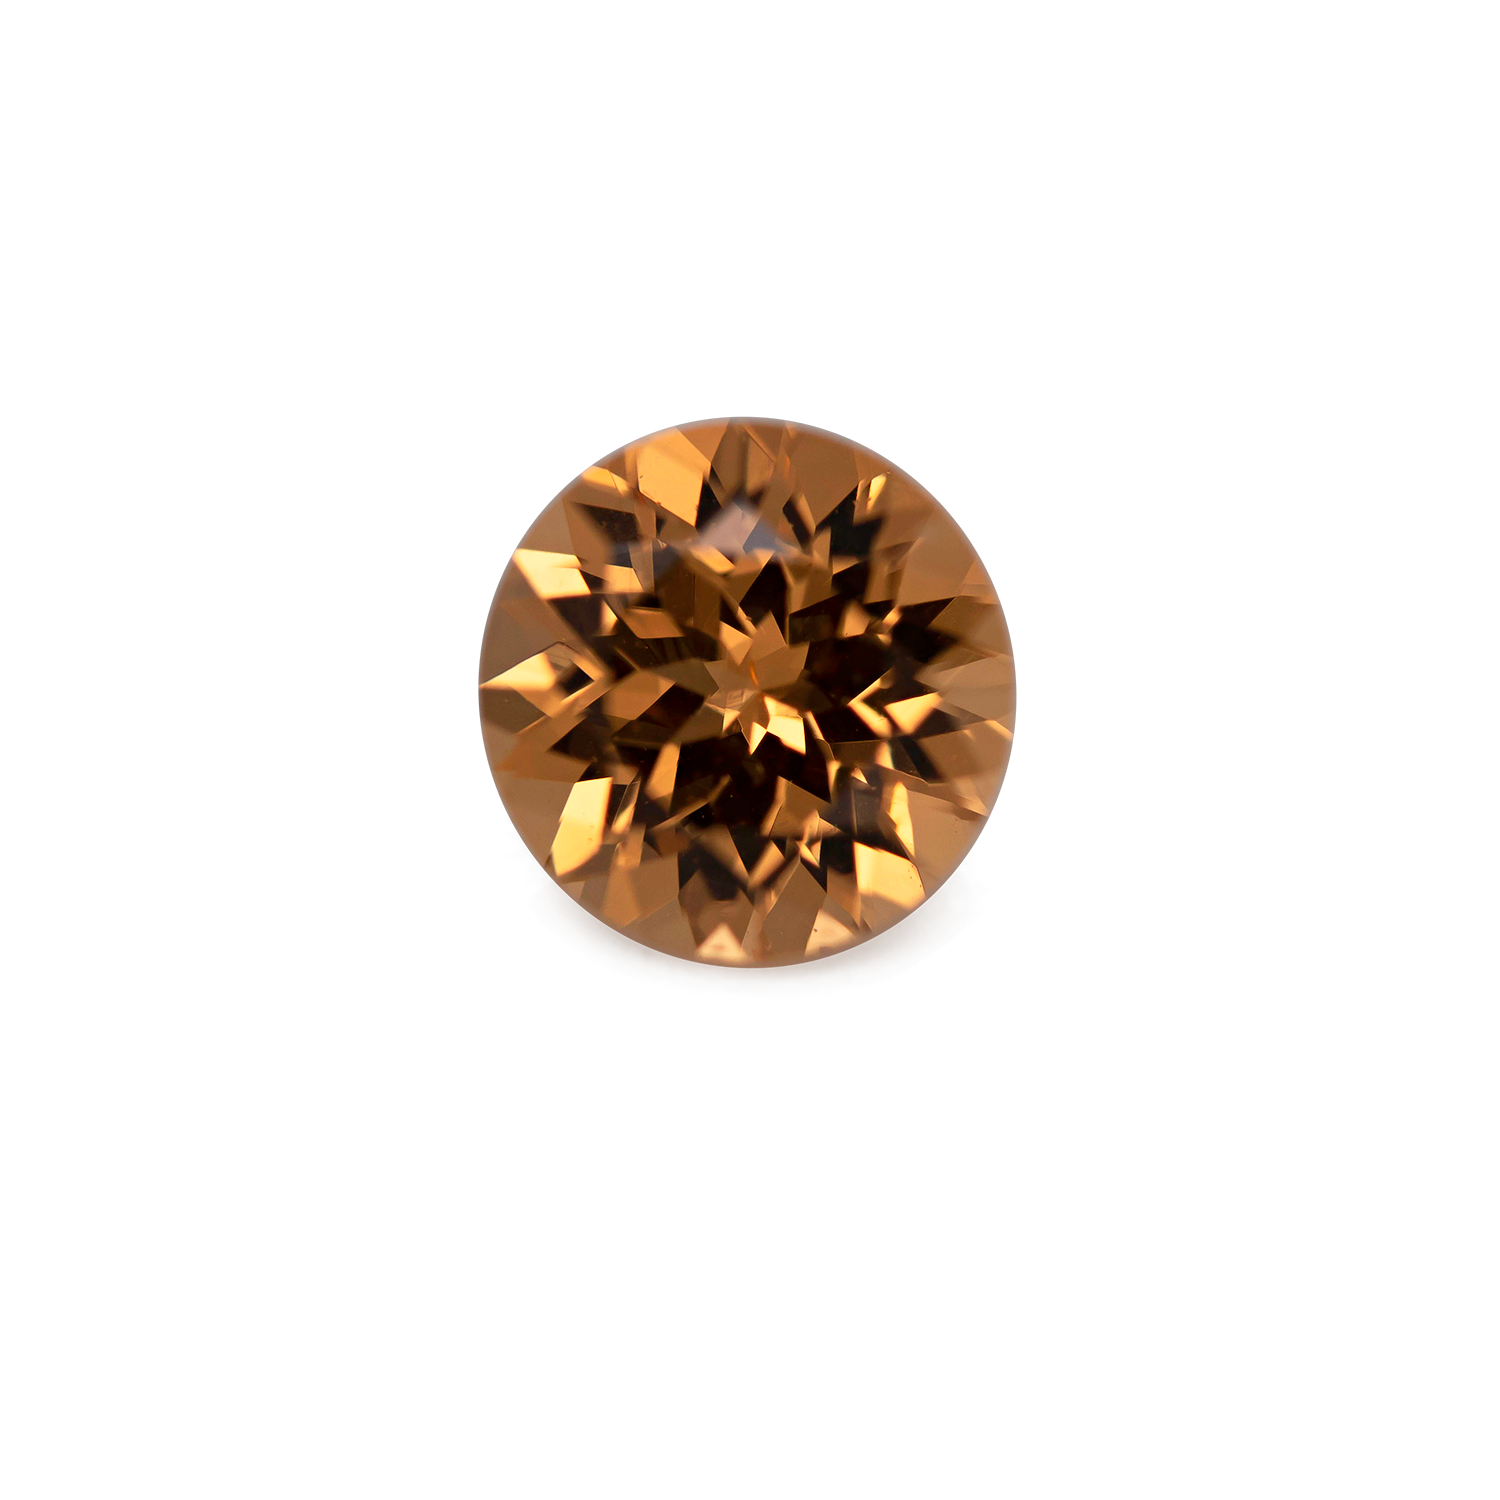 Mandarin Garnet - light orange, round, 4.5x4.5 mm, 0.43-0.48 cts, No. MG99008